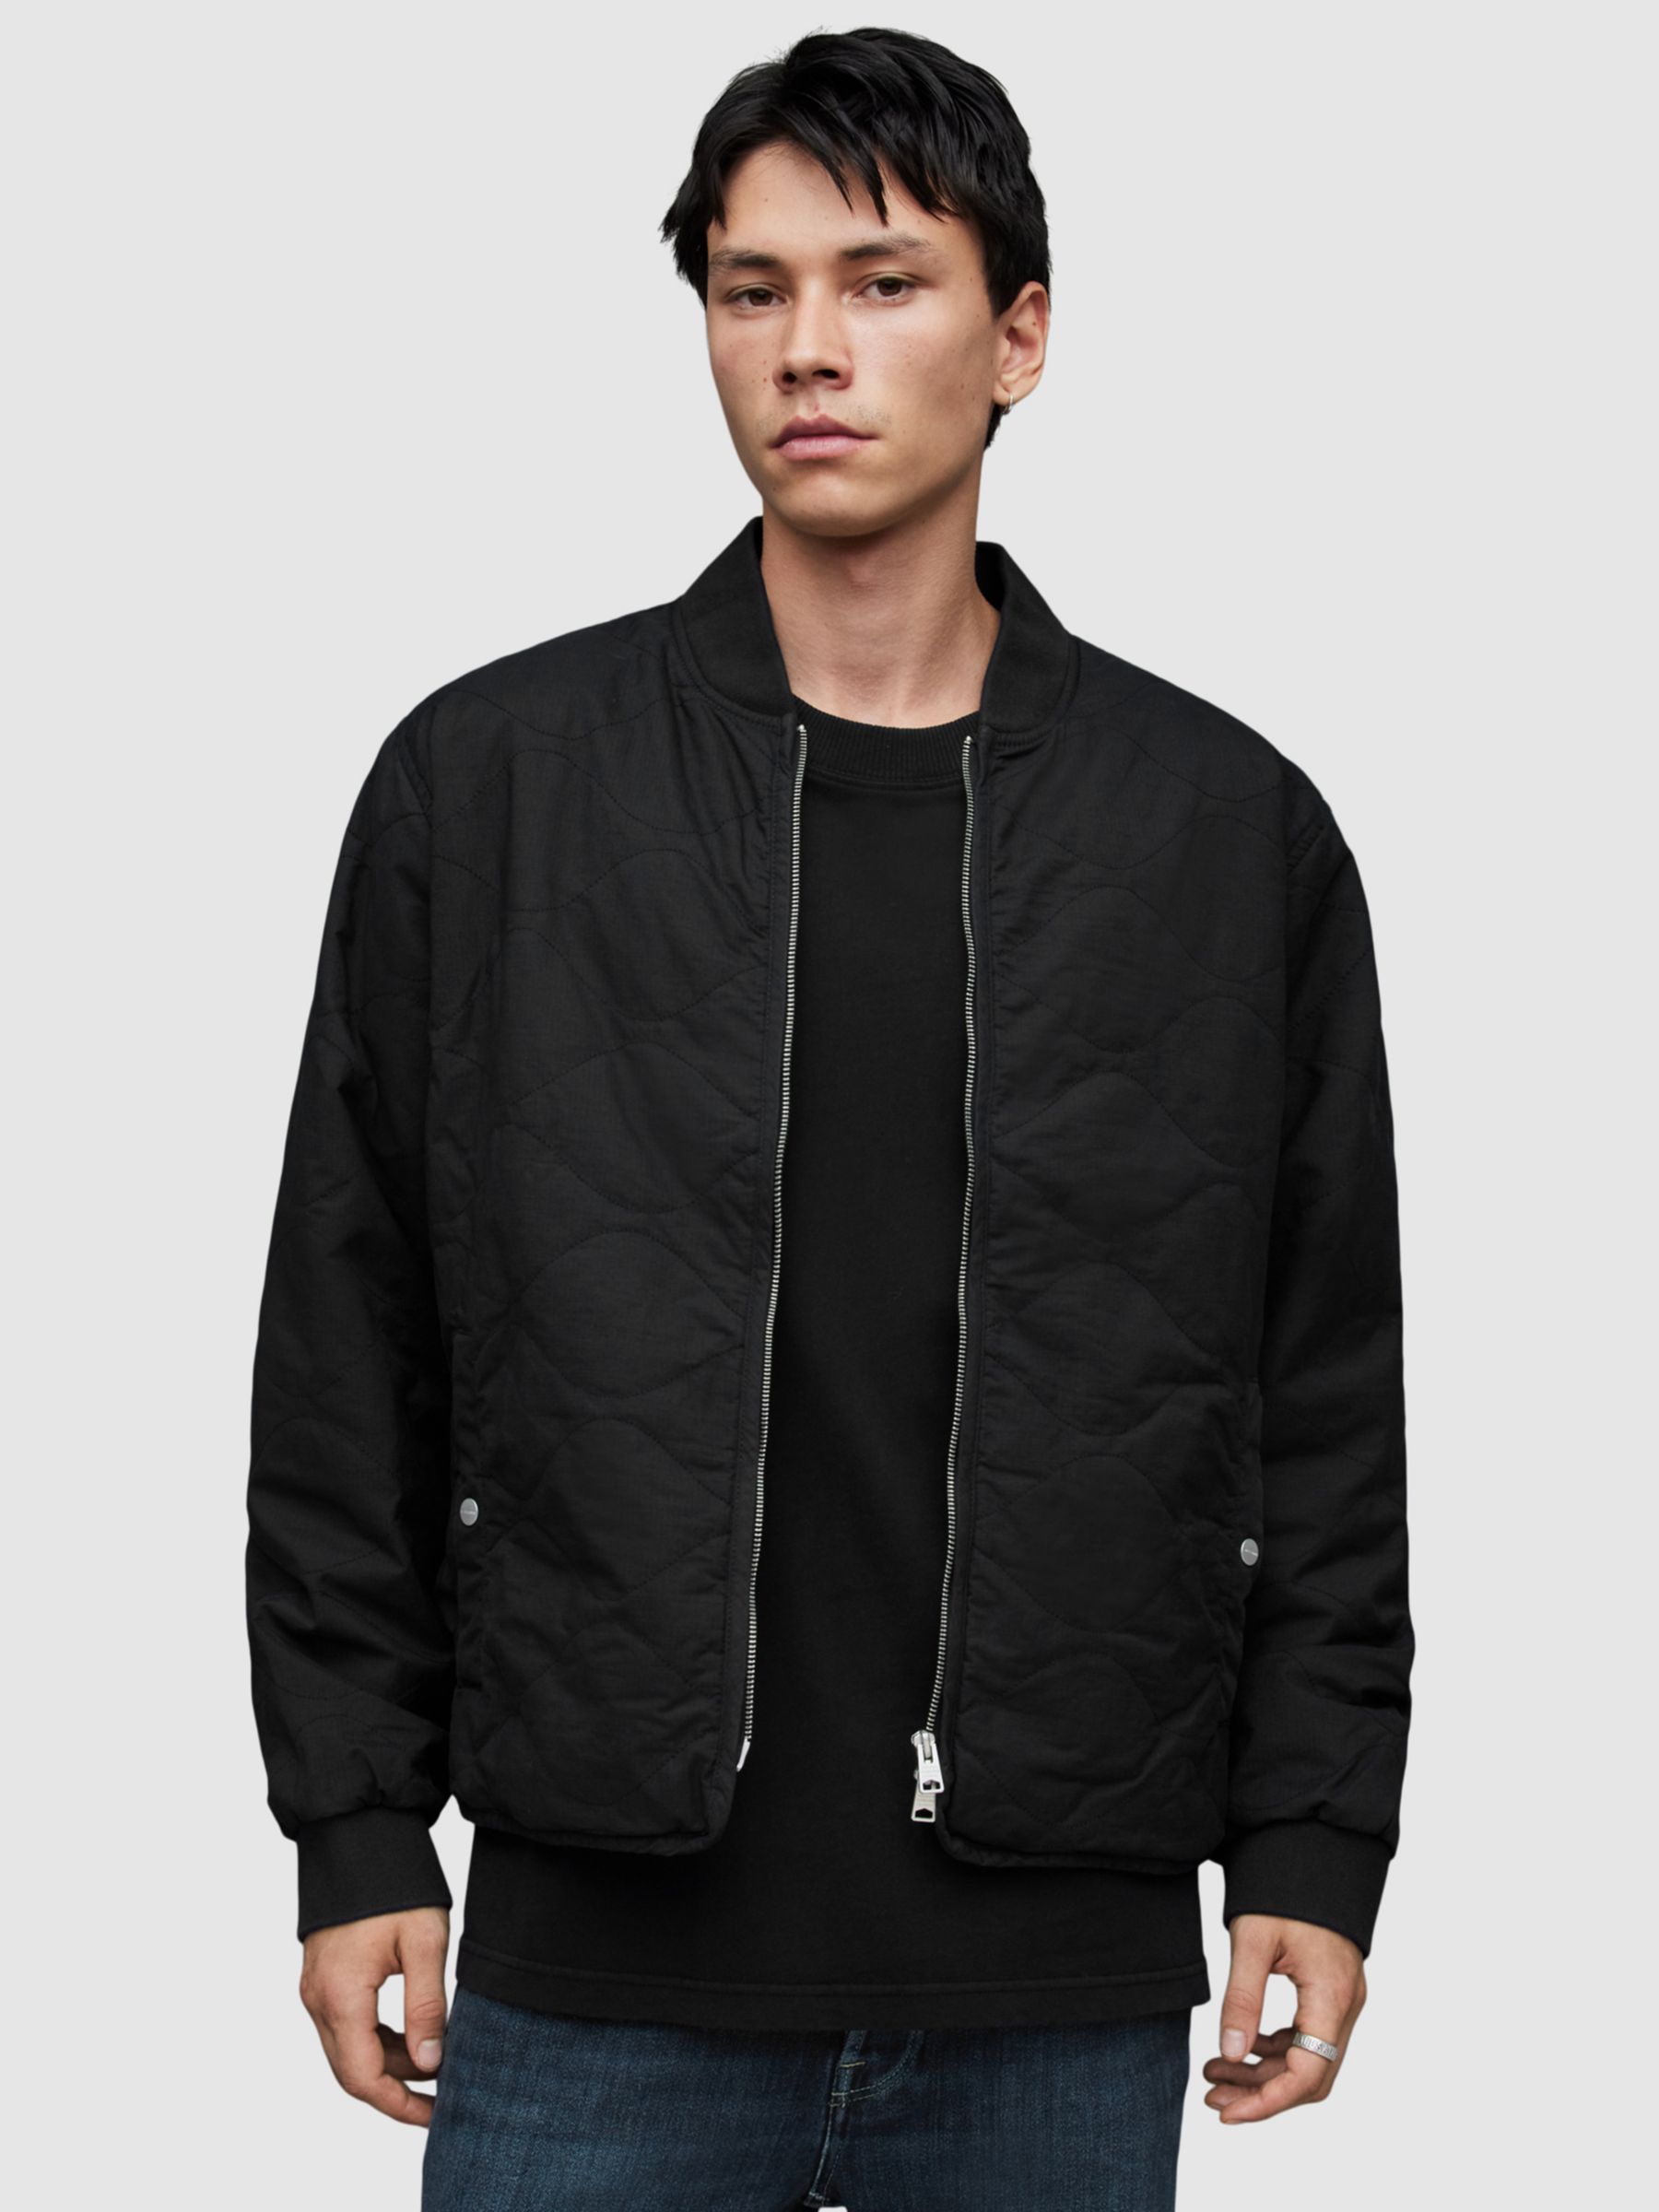 AllSaints Vesco Long Sleeve Jacket, Black at John Lewis & Partners